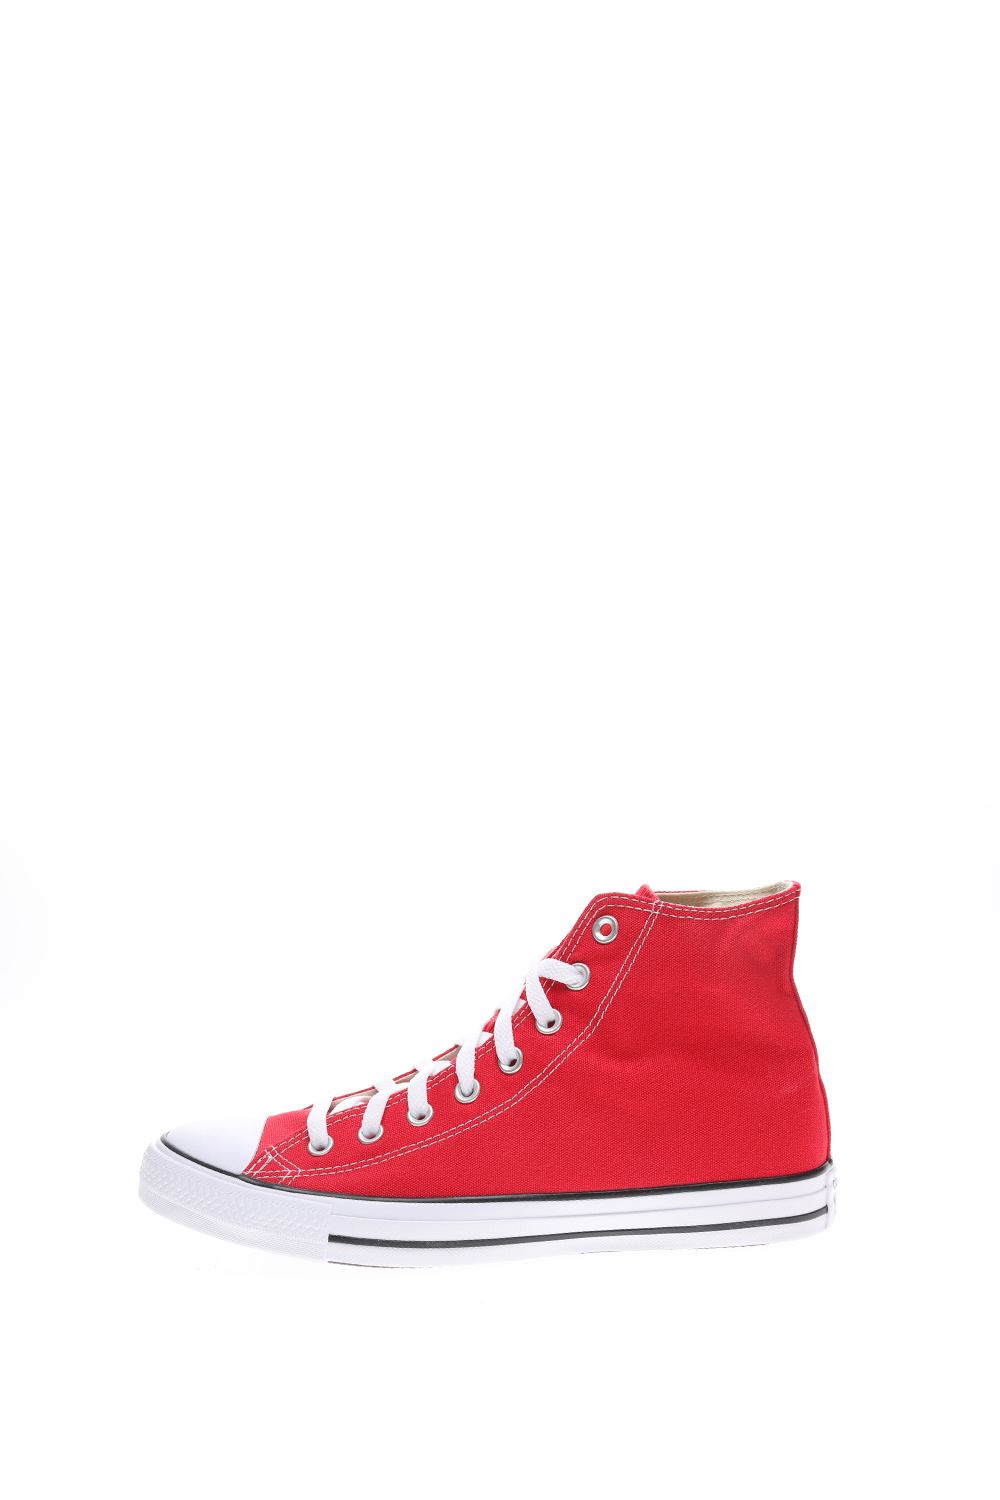 CONVERSE - Unisex μποτάκια Chuck Taylor κόκκινα Ανδρικά/Παπούτσια/Sneakers